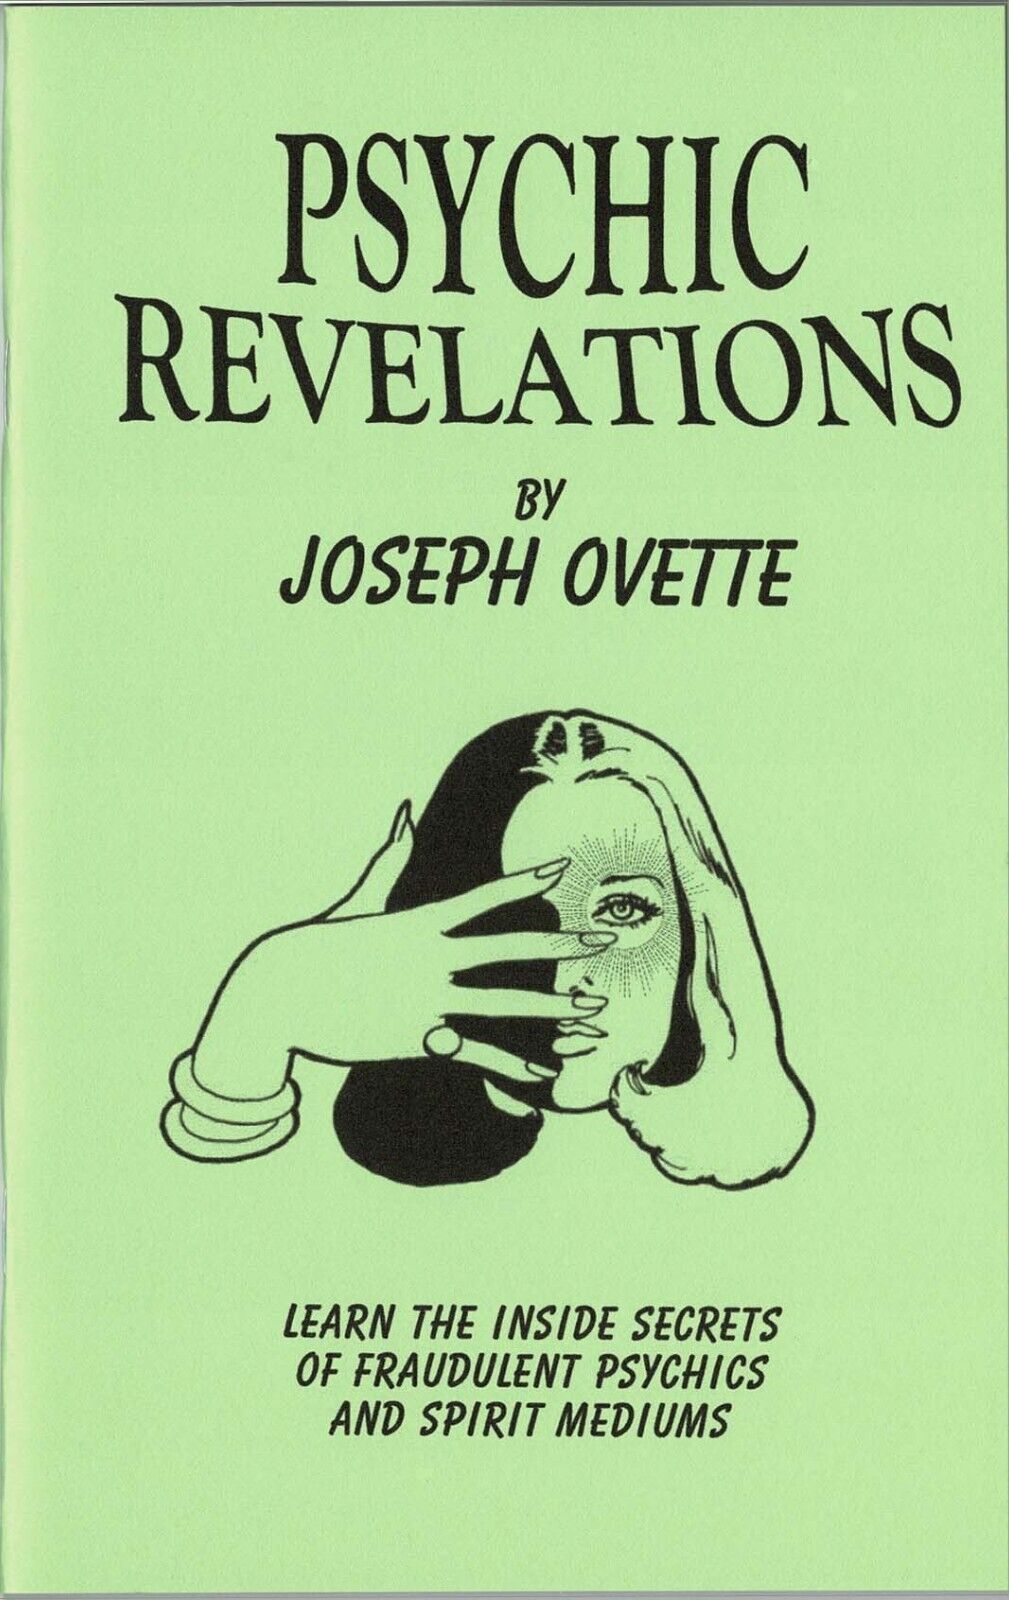 Psychic Revelations by Ovette (séance and spirit medium secrets)